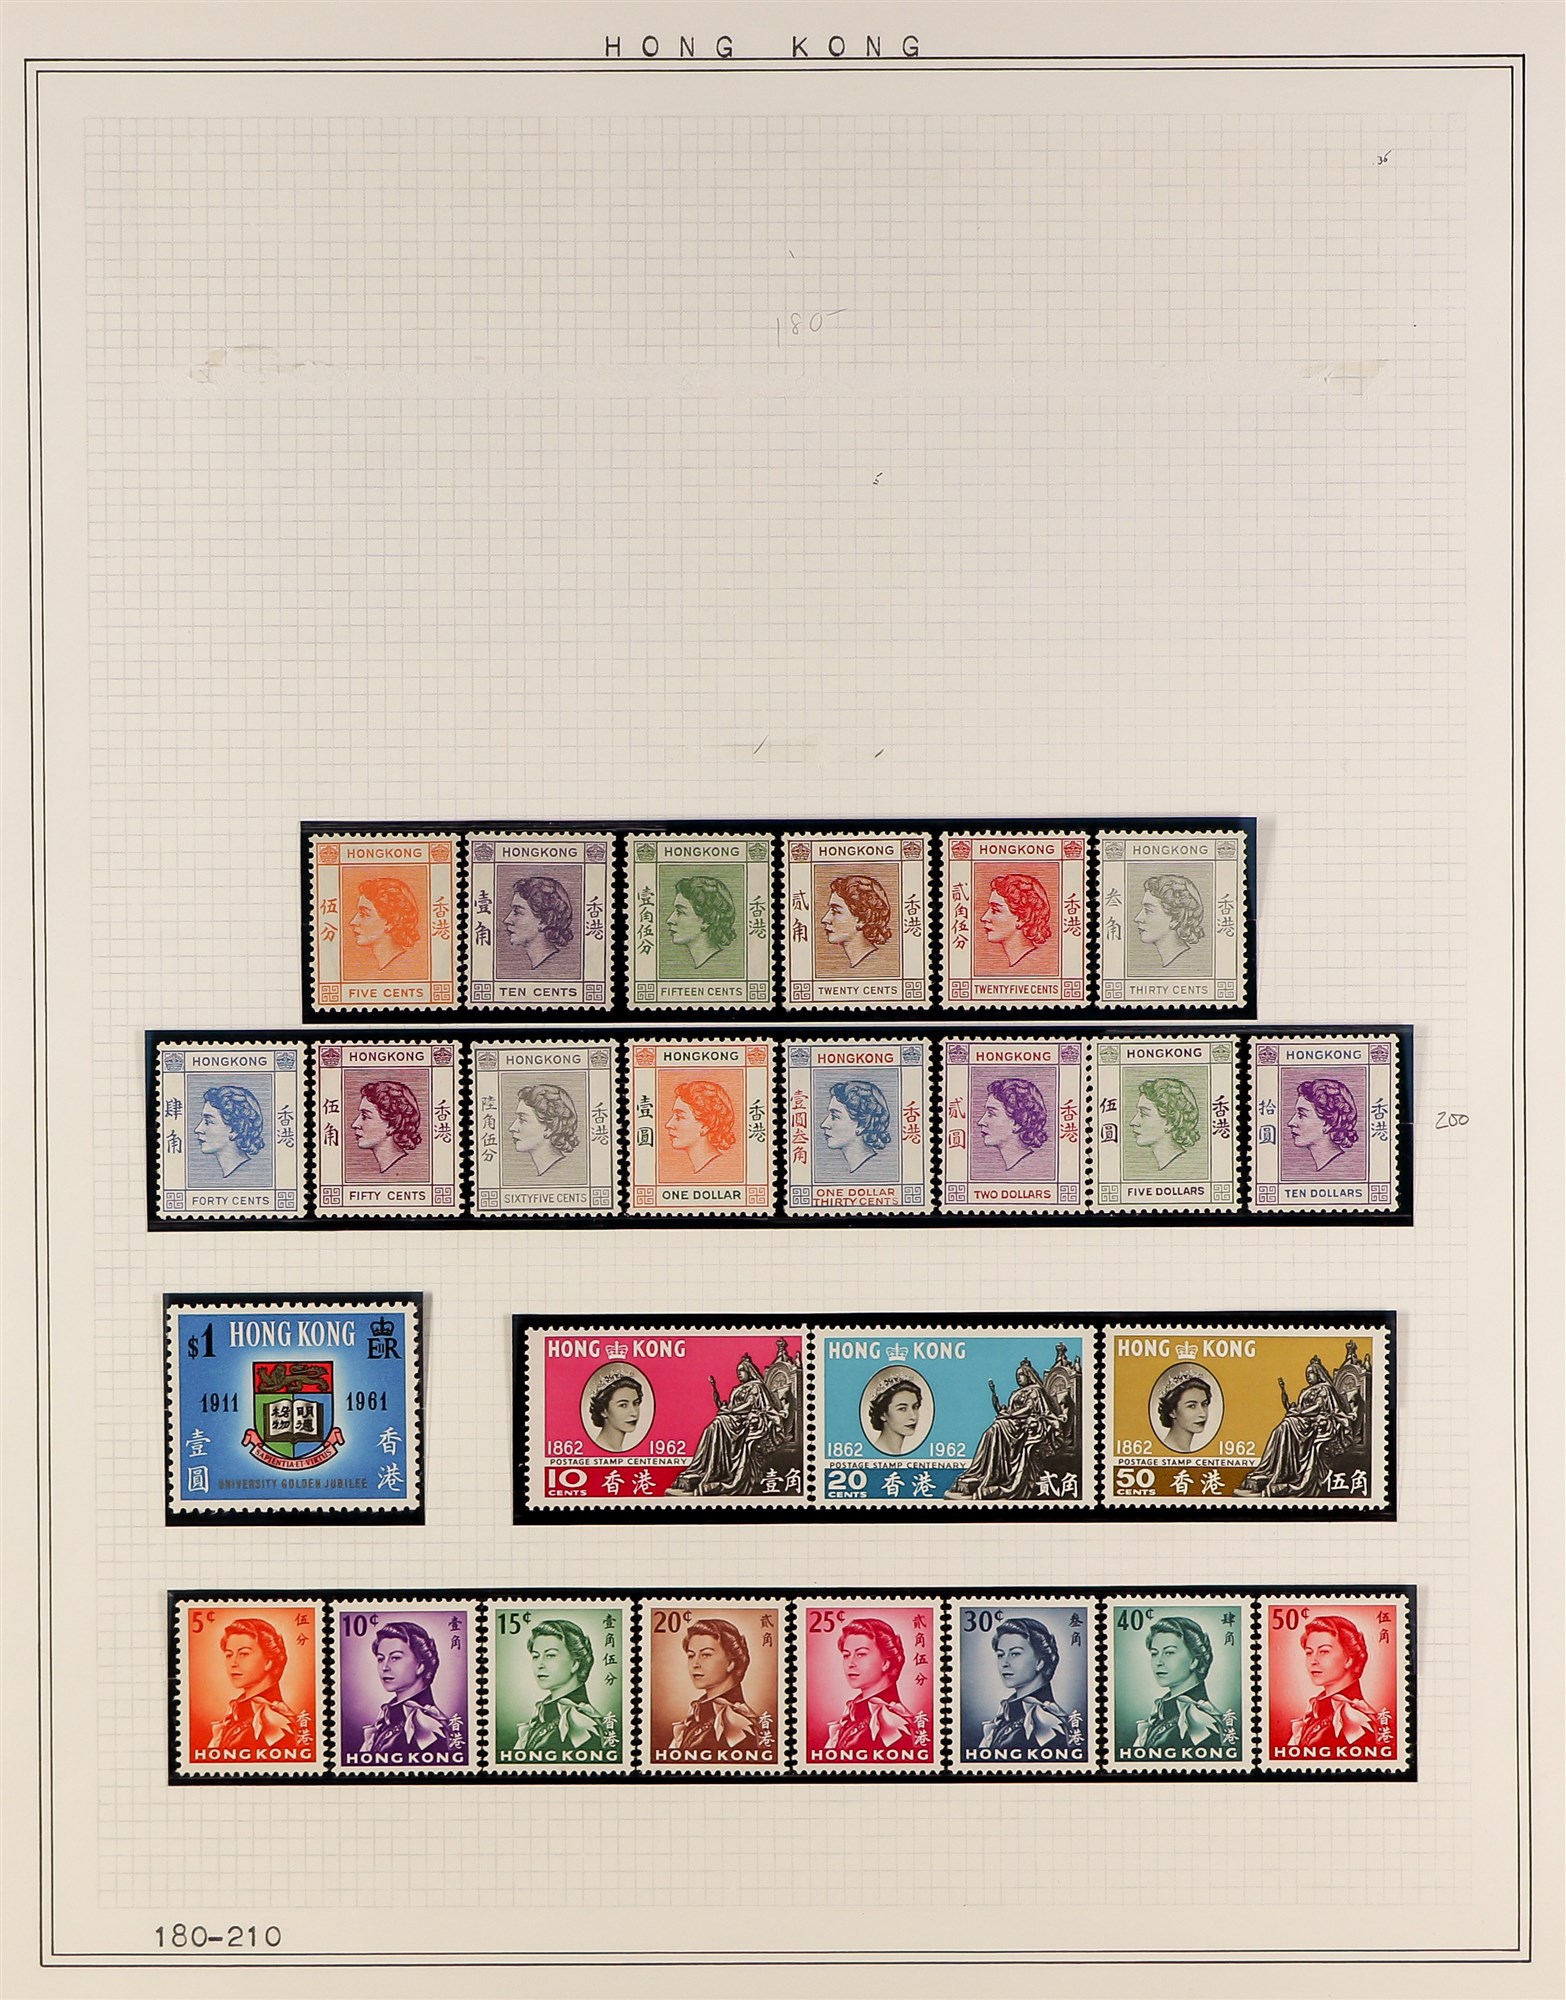 HONG KONG 1954-69 NEVER HINGED MINT COLLECTION incl. 1954-62 set, 1962-73 Annigoni set, 1963 $1.30